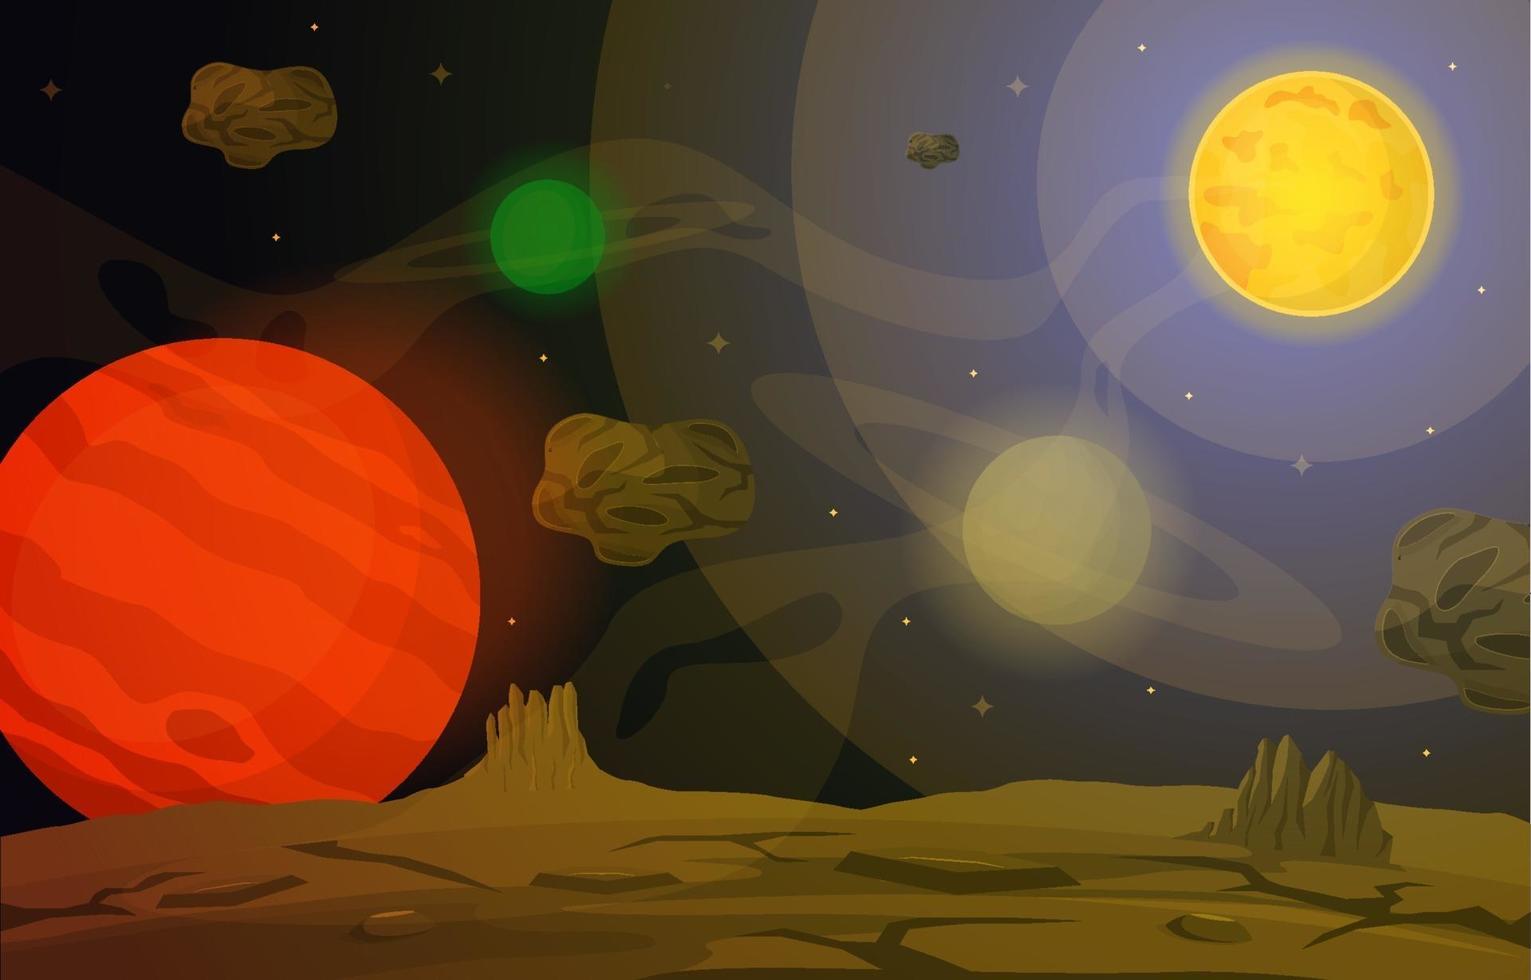 Landscape Surface of Planet Sky Space Science Fiction Fantasy Illustration vector